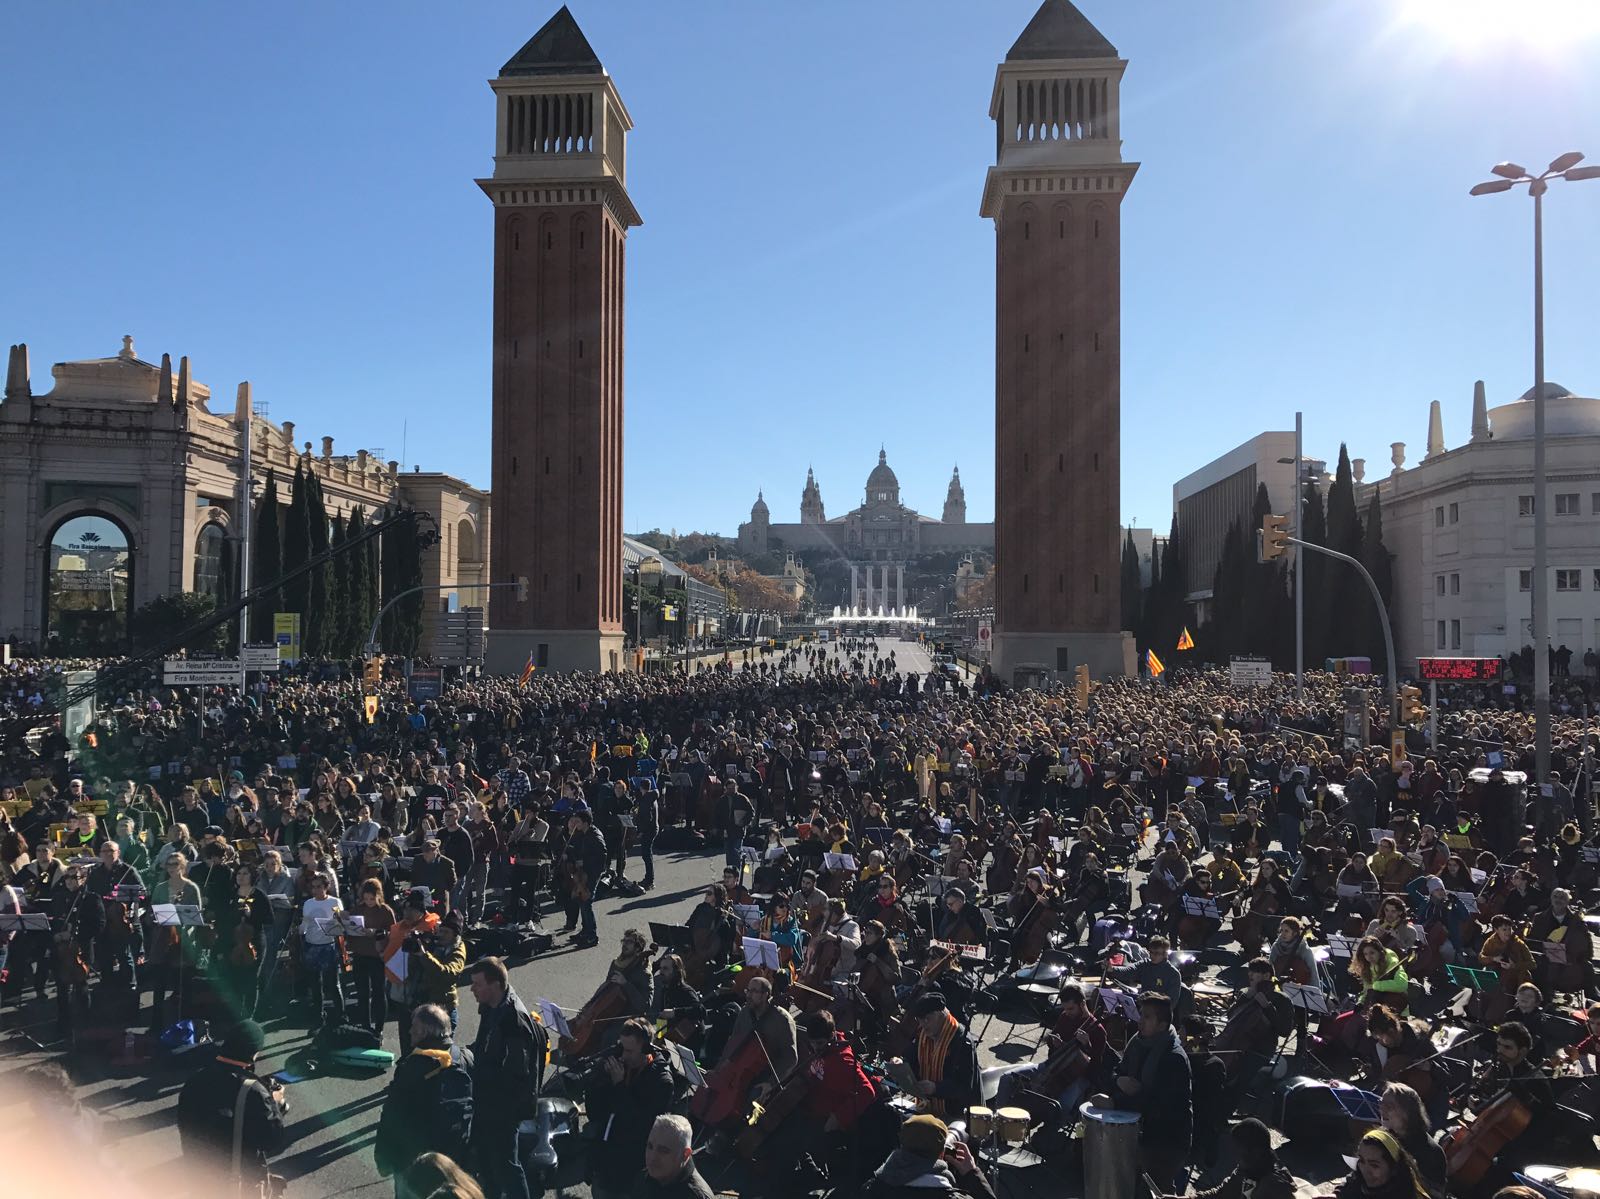 10,000 musicians playing for freedom, in Barcelona's Plaça Espanya